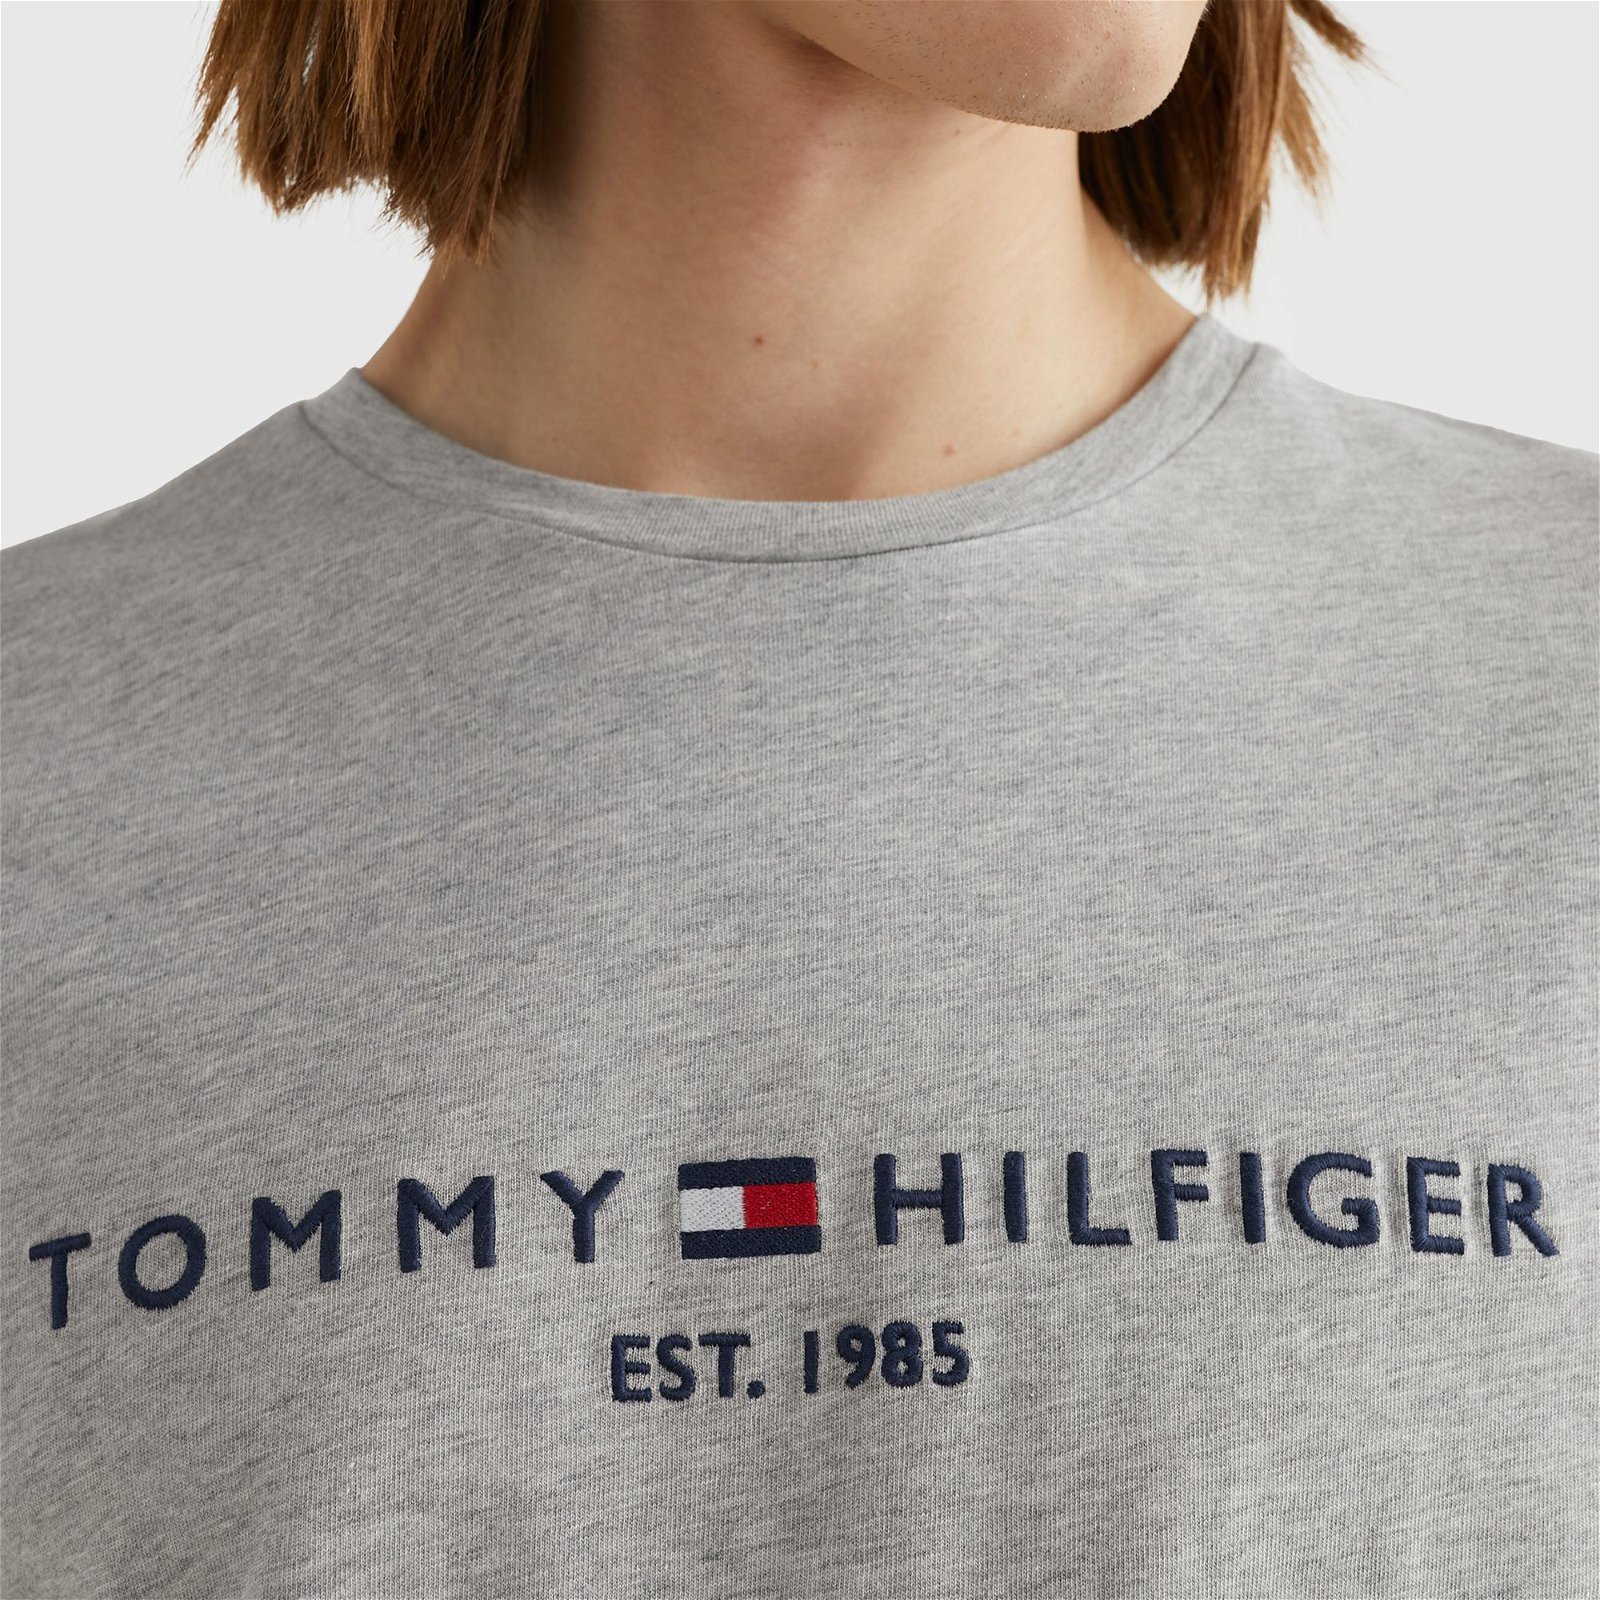 Tommy Hilfiger Erkek Gri T-Shirt